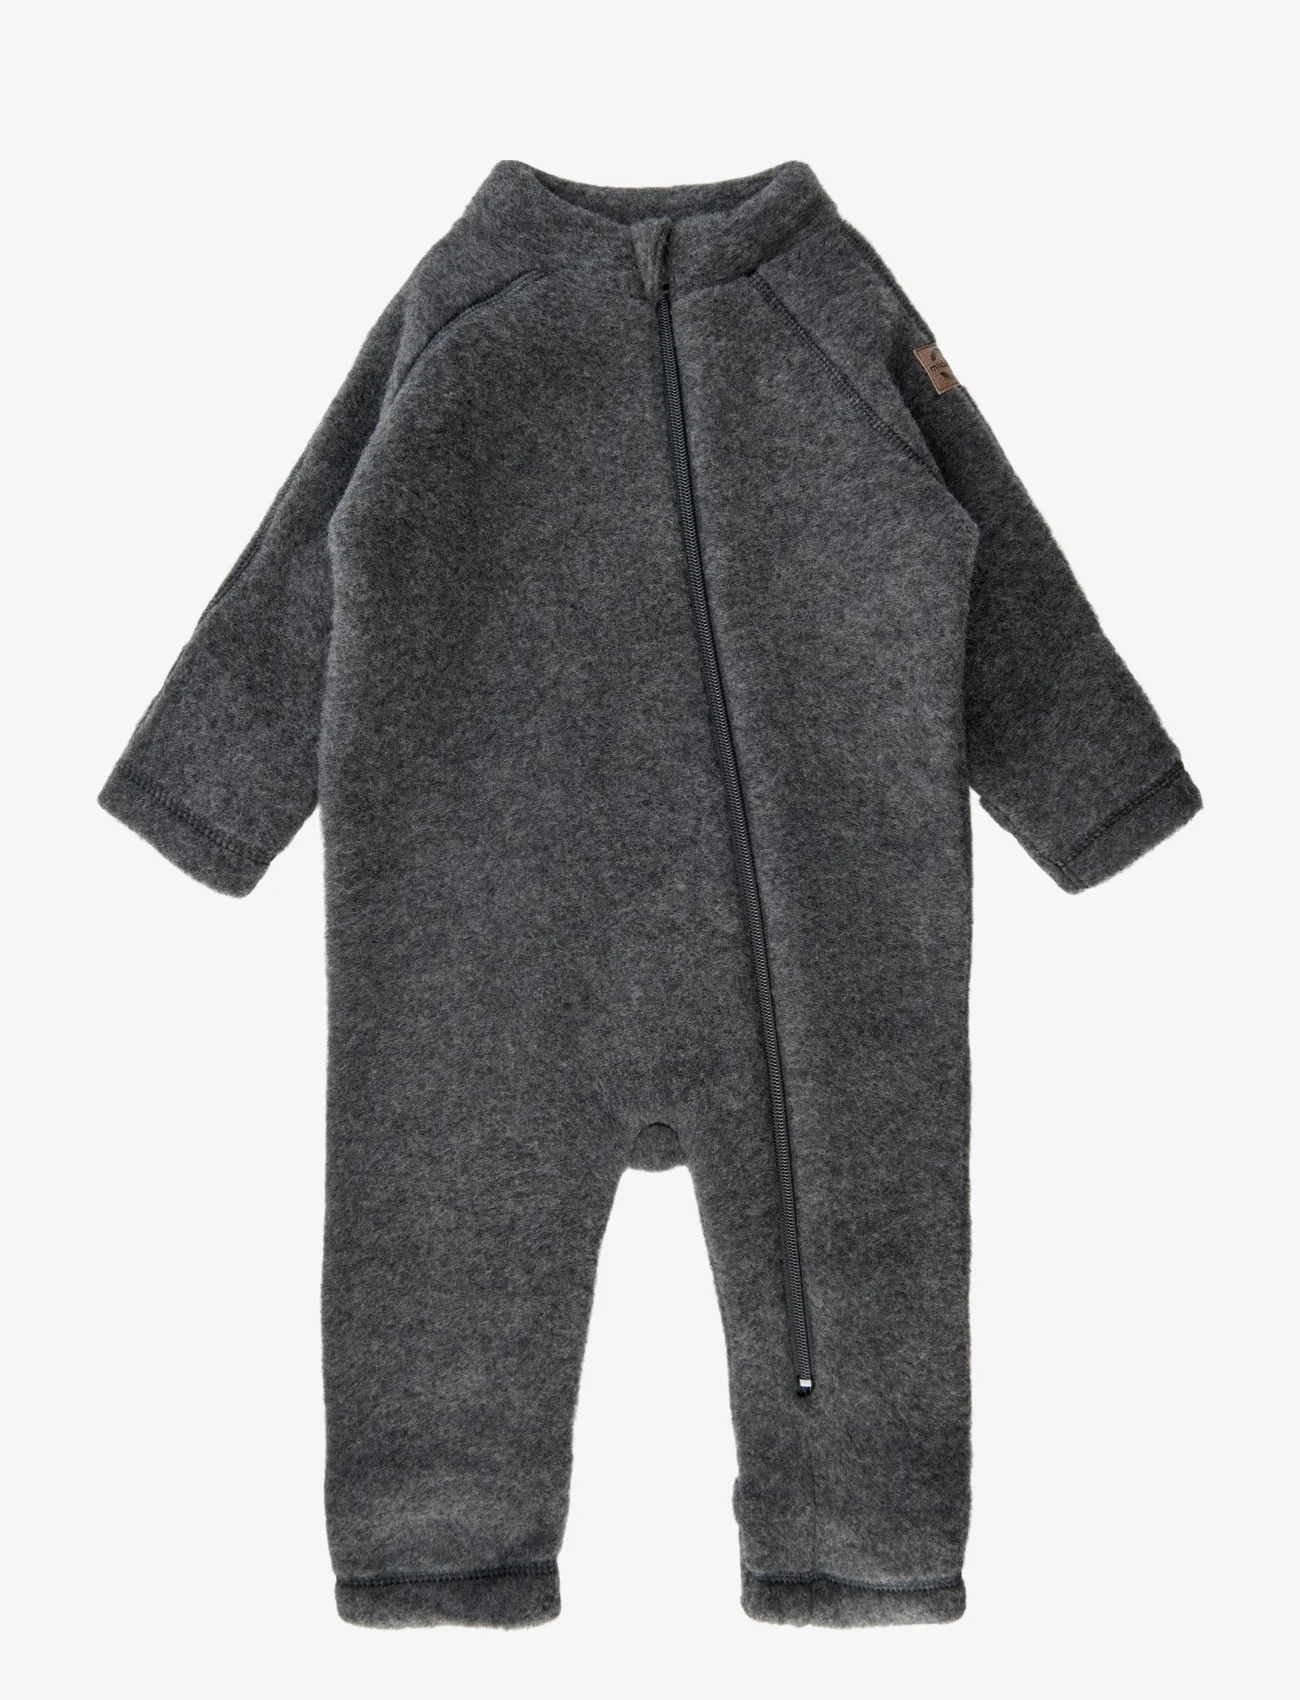 mikk-line - Wool Baby Suit - fleece coveralls - anthracite melange - 0